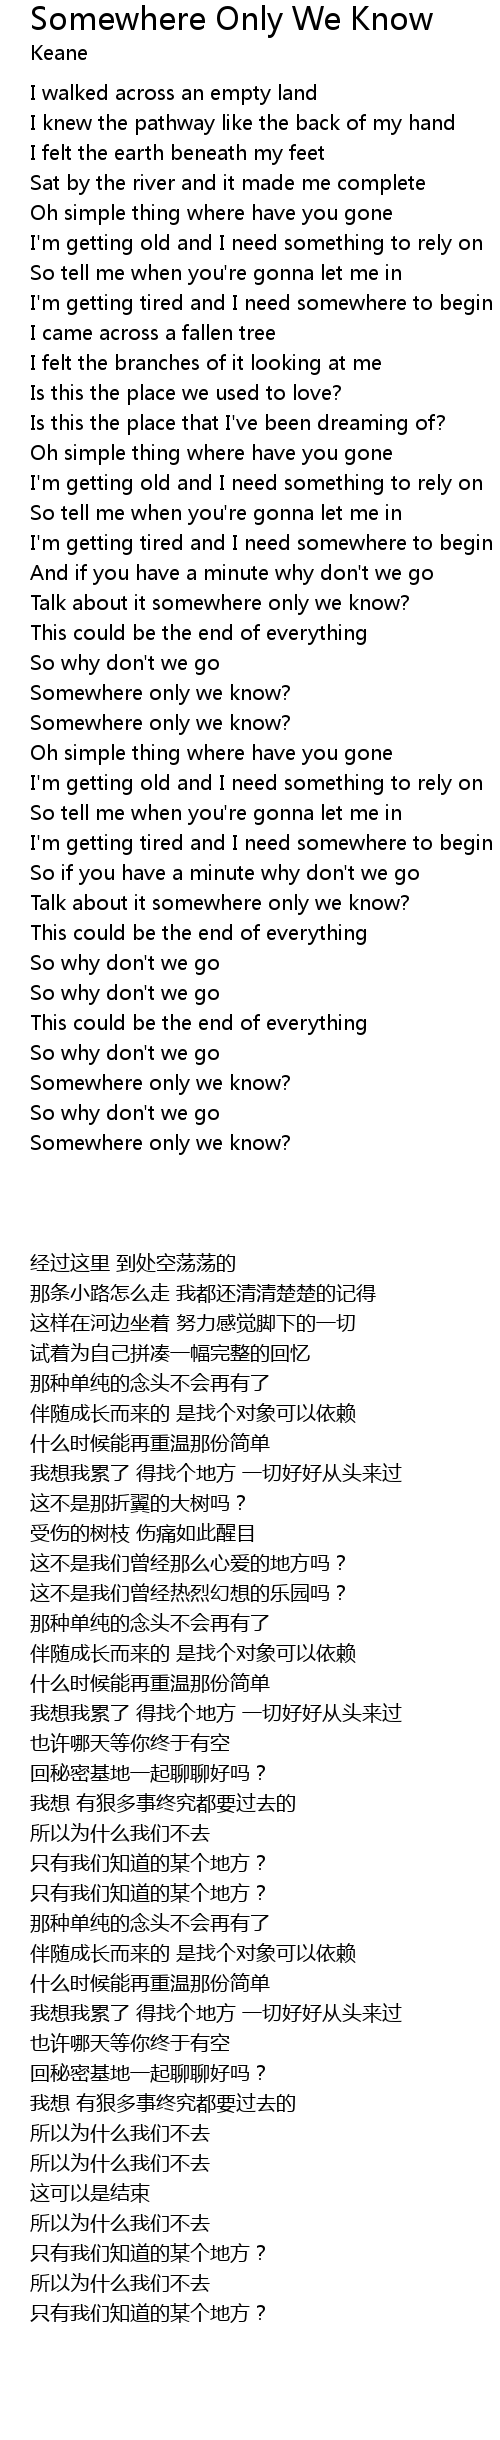 Somewhere Only We Know Lyrics